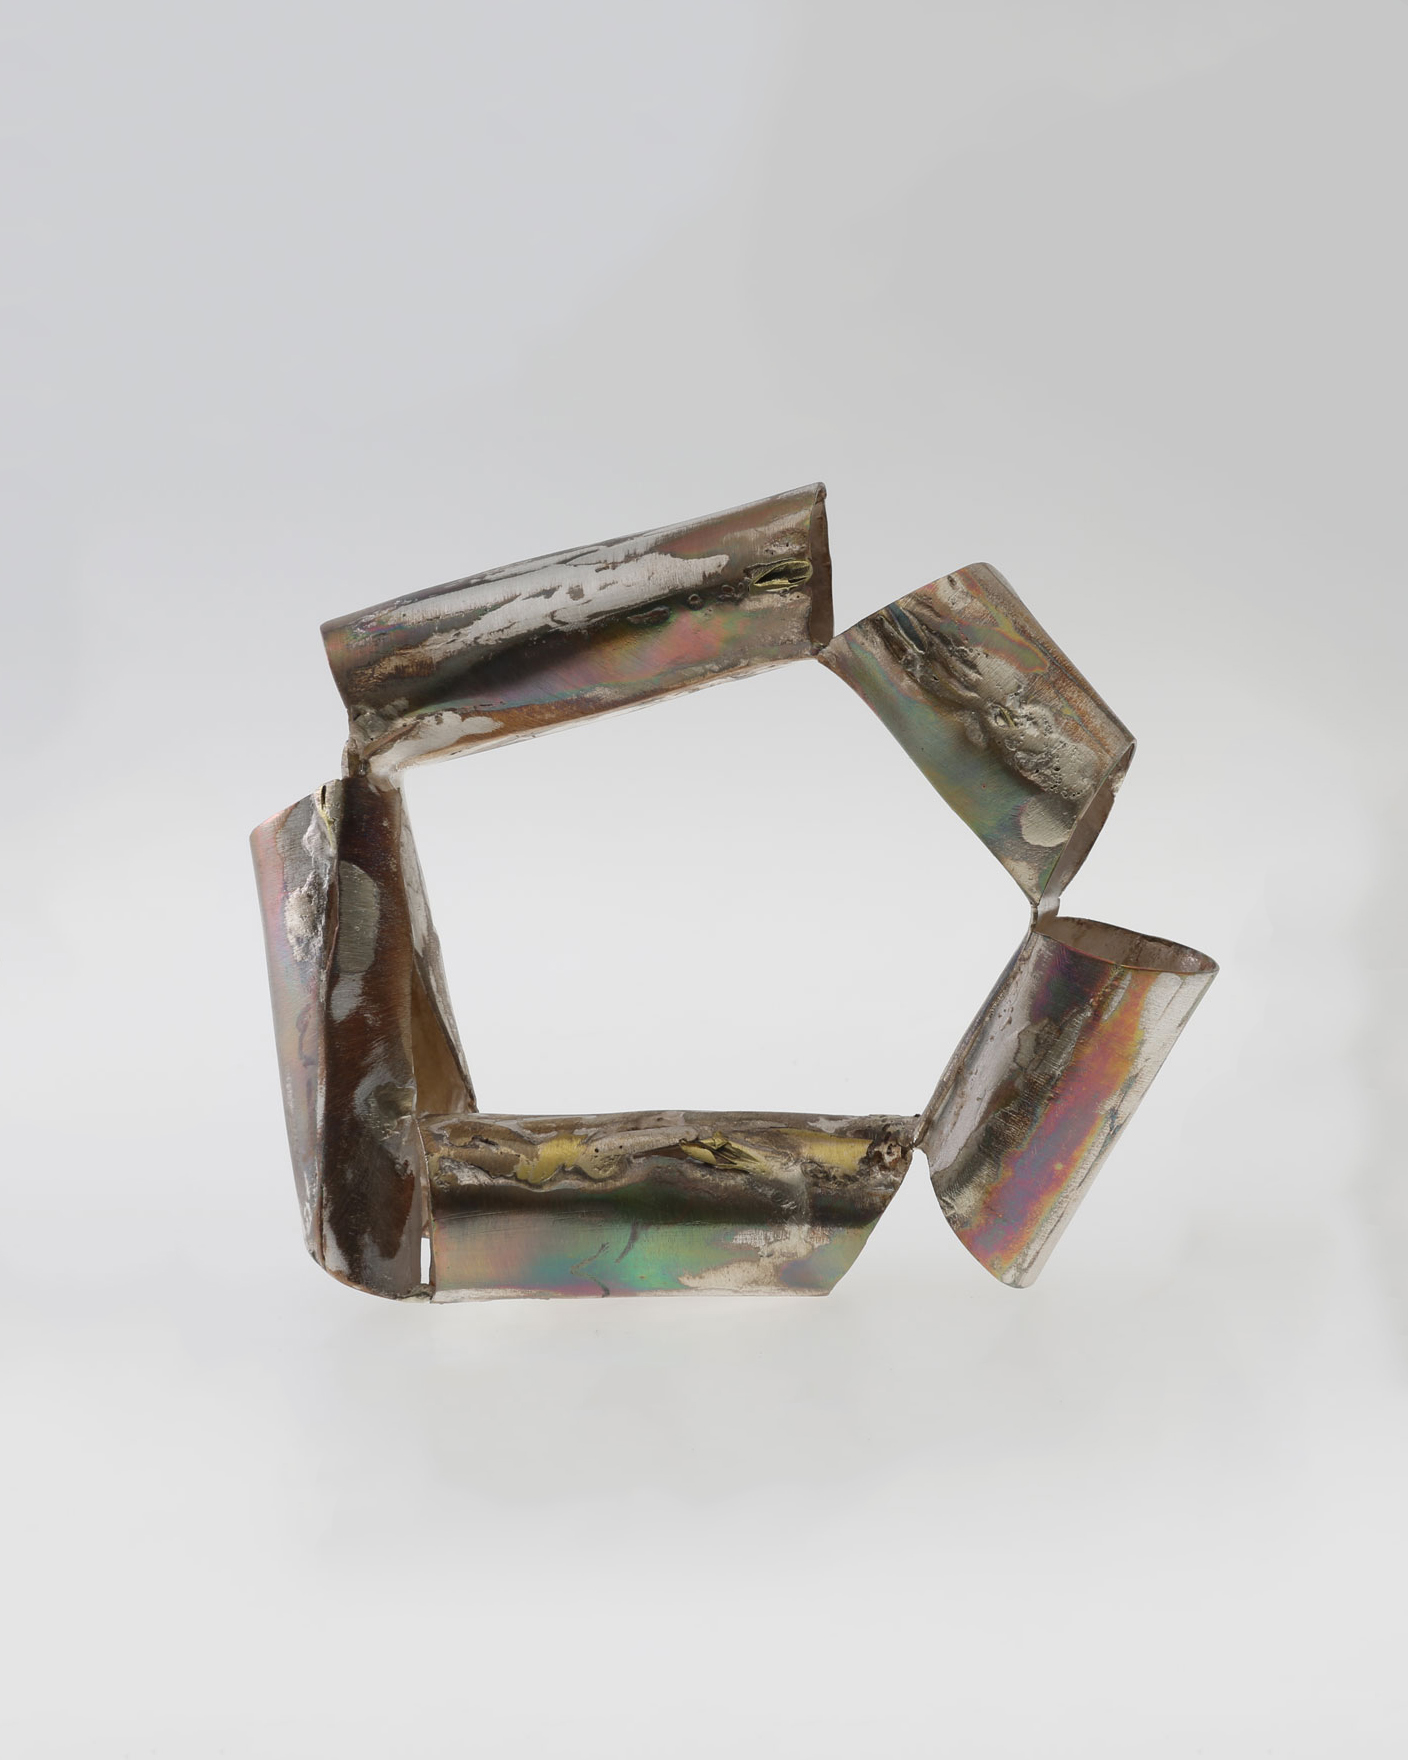 Rudolf Kocéa, Stücke 2 (Fragments 2), 2018, bracelet; silver, copper, ø 65 mm, €2125